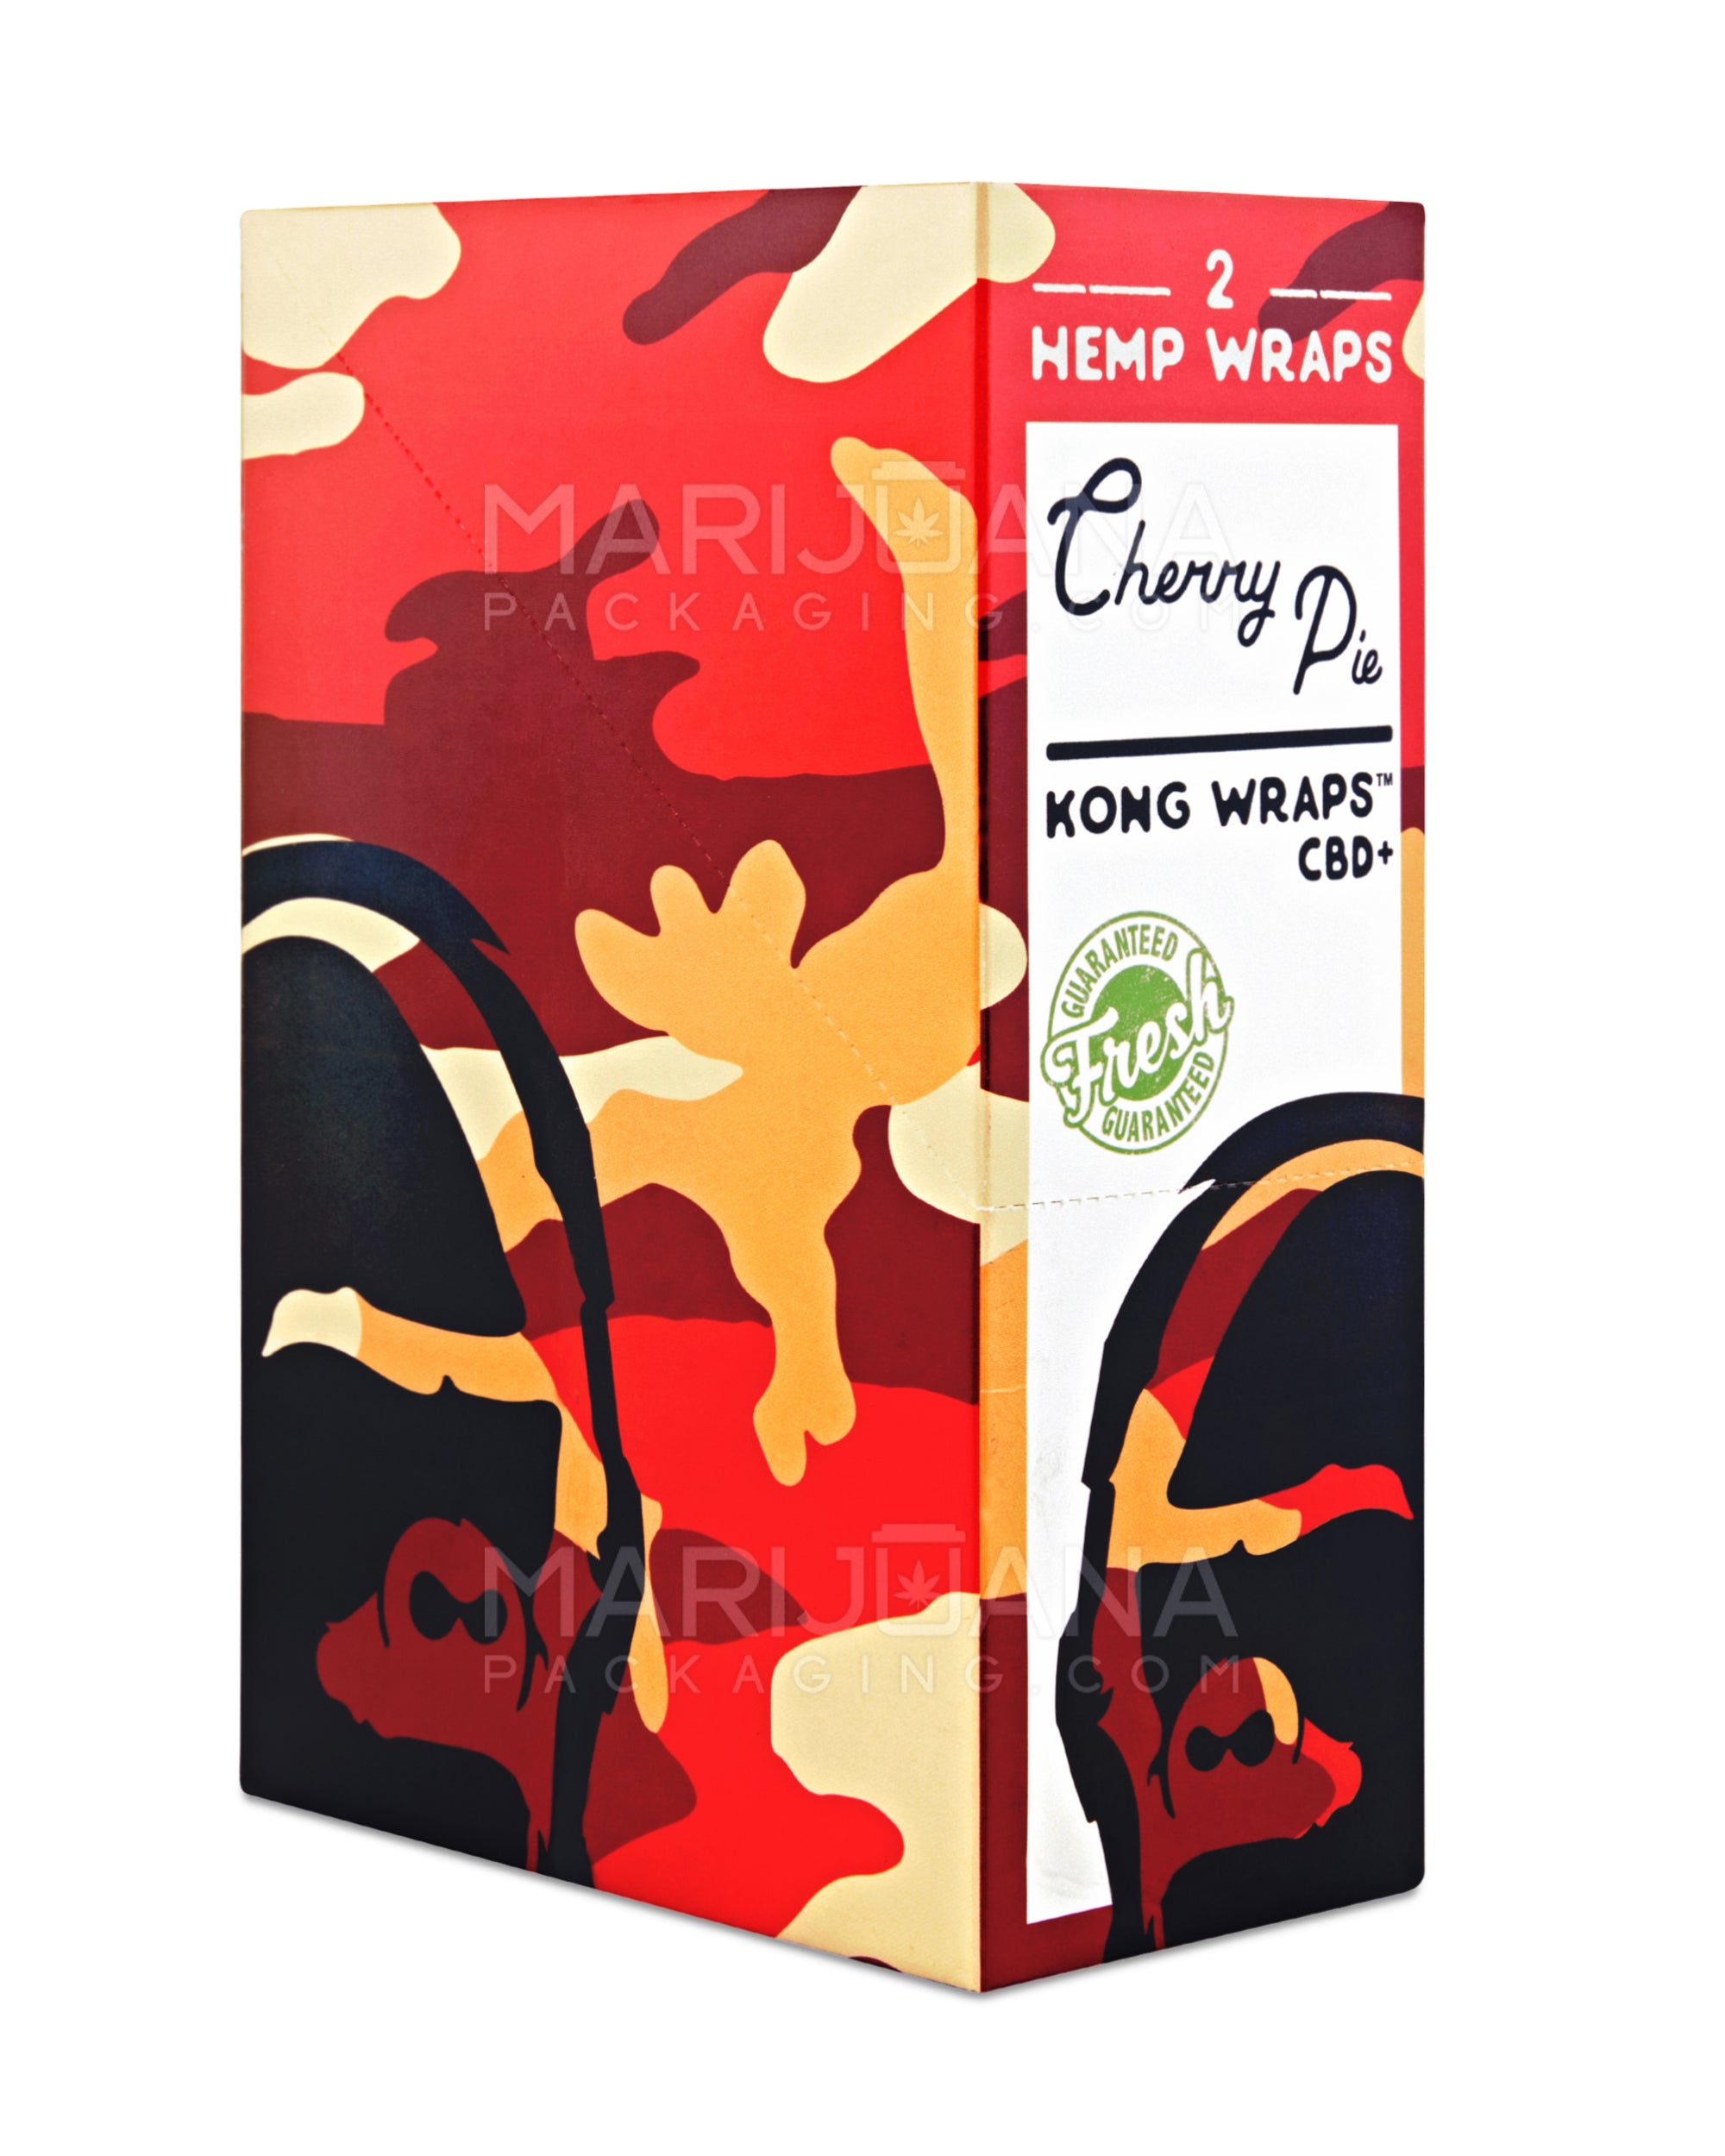 KONG WRAPS | 'Retail Display' Organic Hemp Blunt Wraps | CBD Infused - Cherry Pie - 25 Count